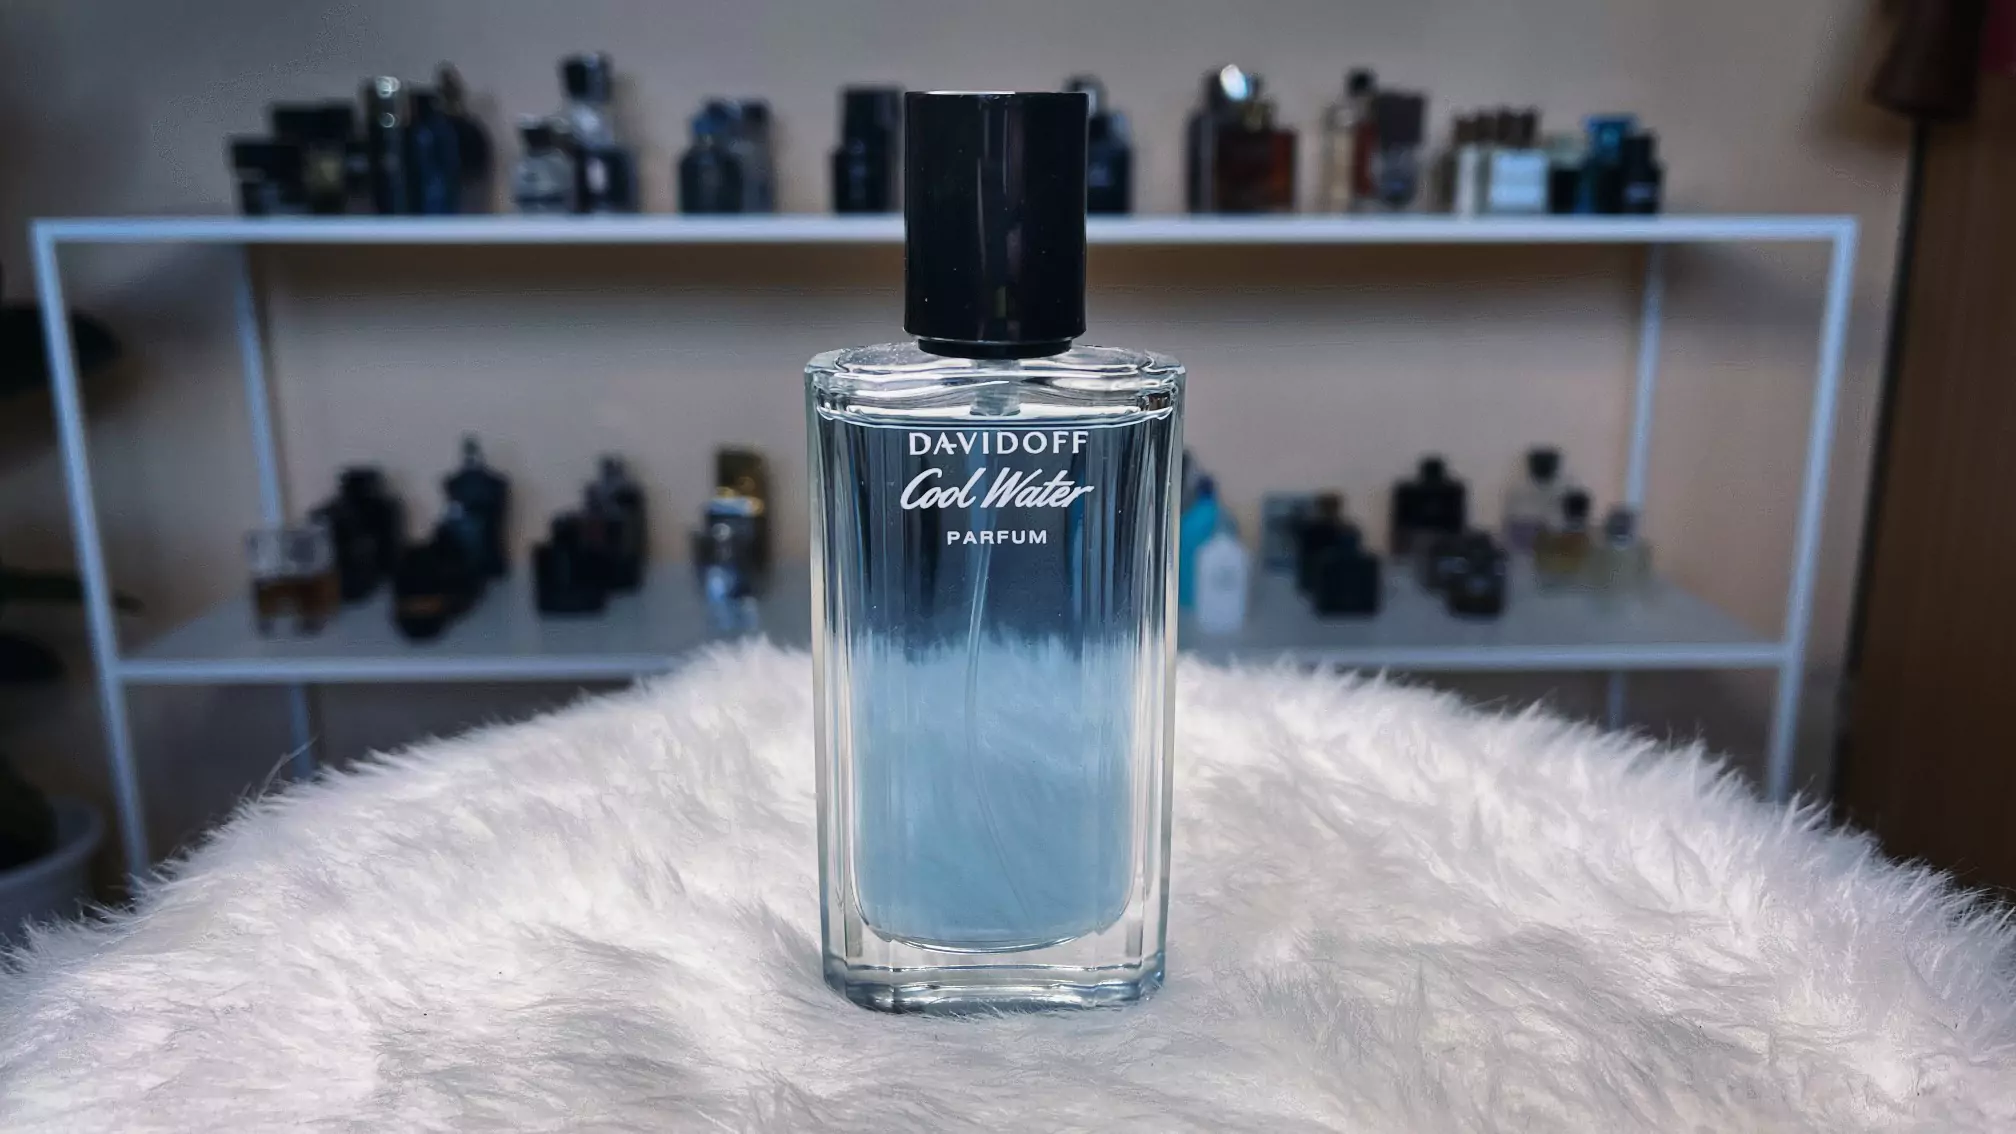 Cool Water Parfum (Davidoff) || Review - Olfactory Ambition